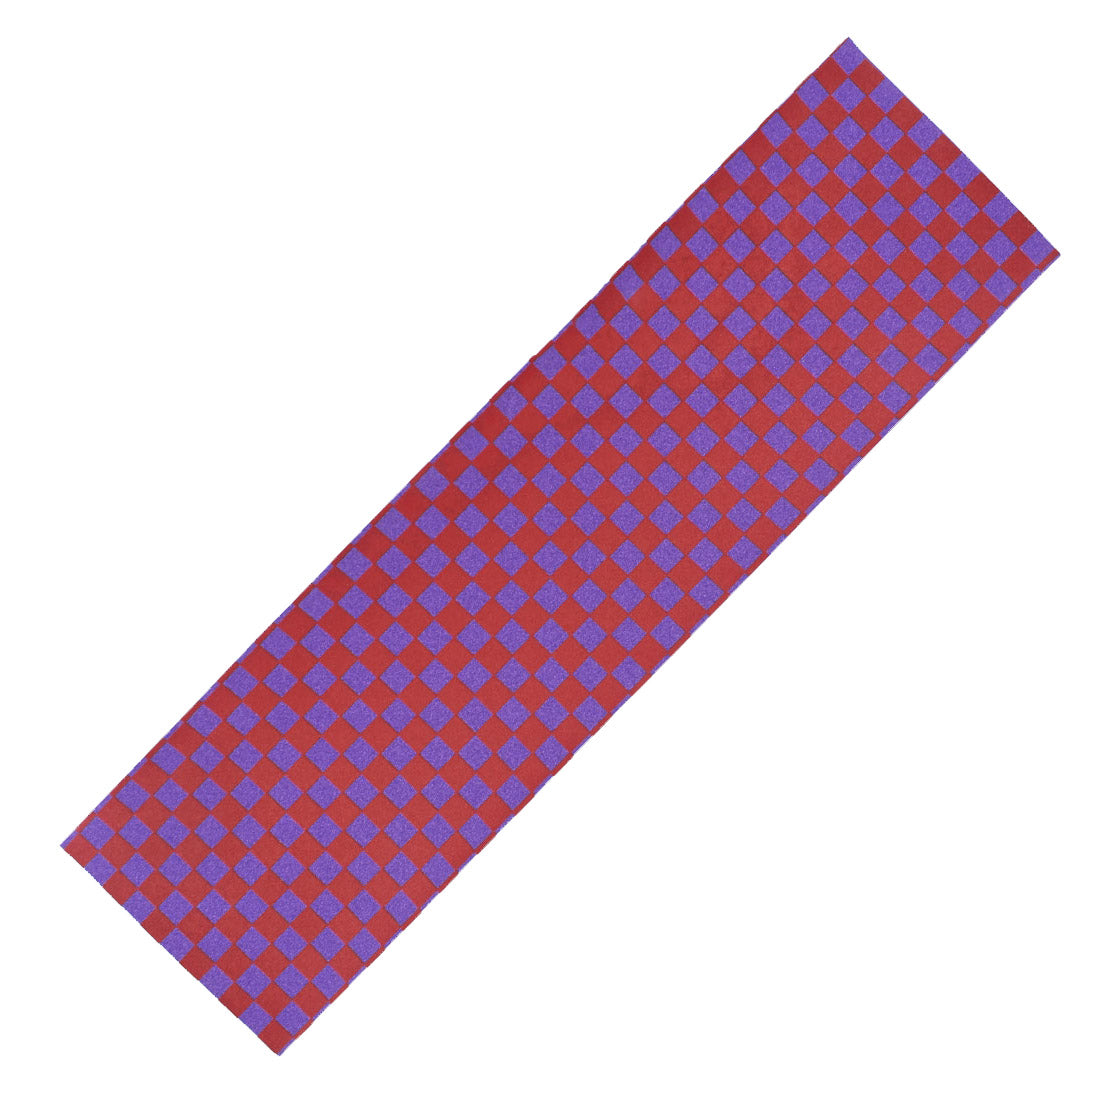 Fruity Griptape - Checkered Purple Red Check Griptape